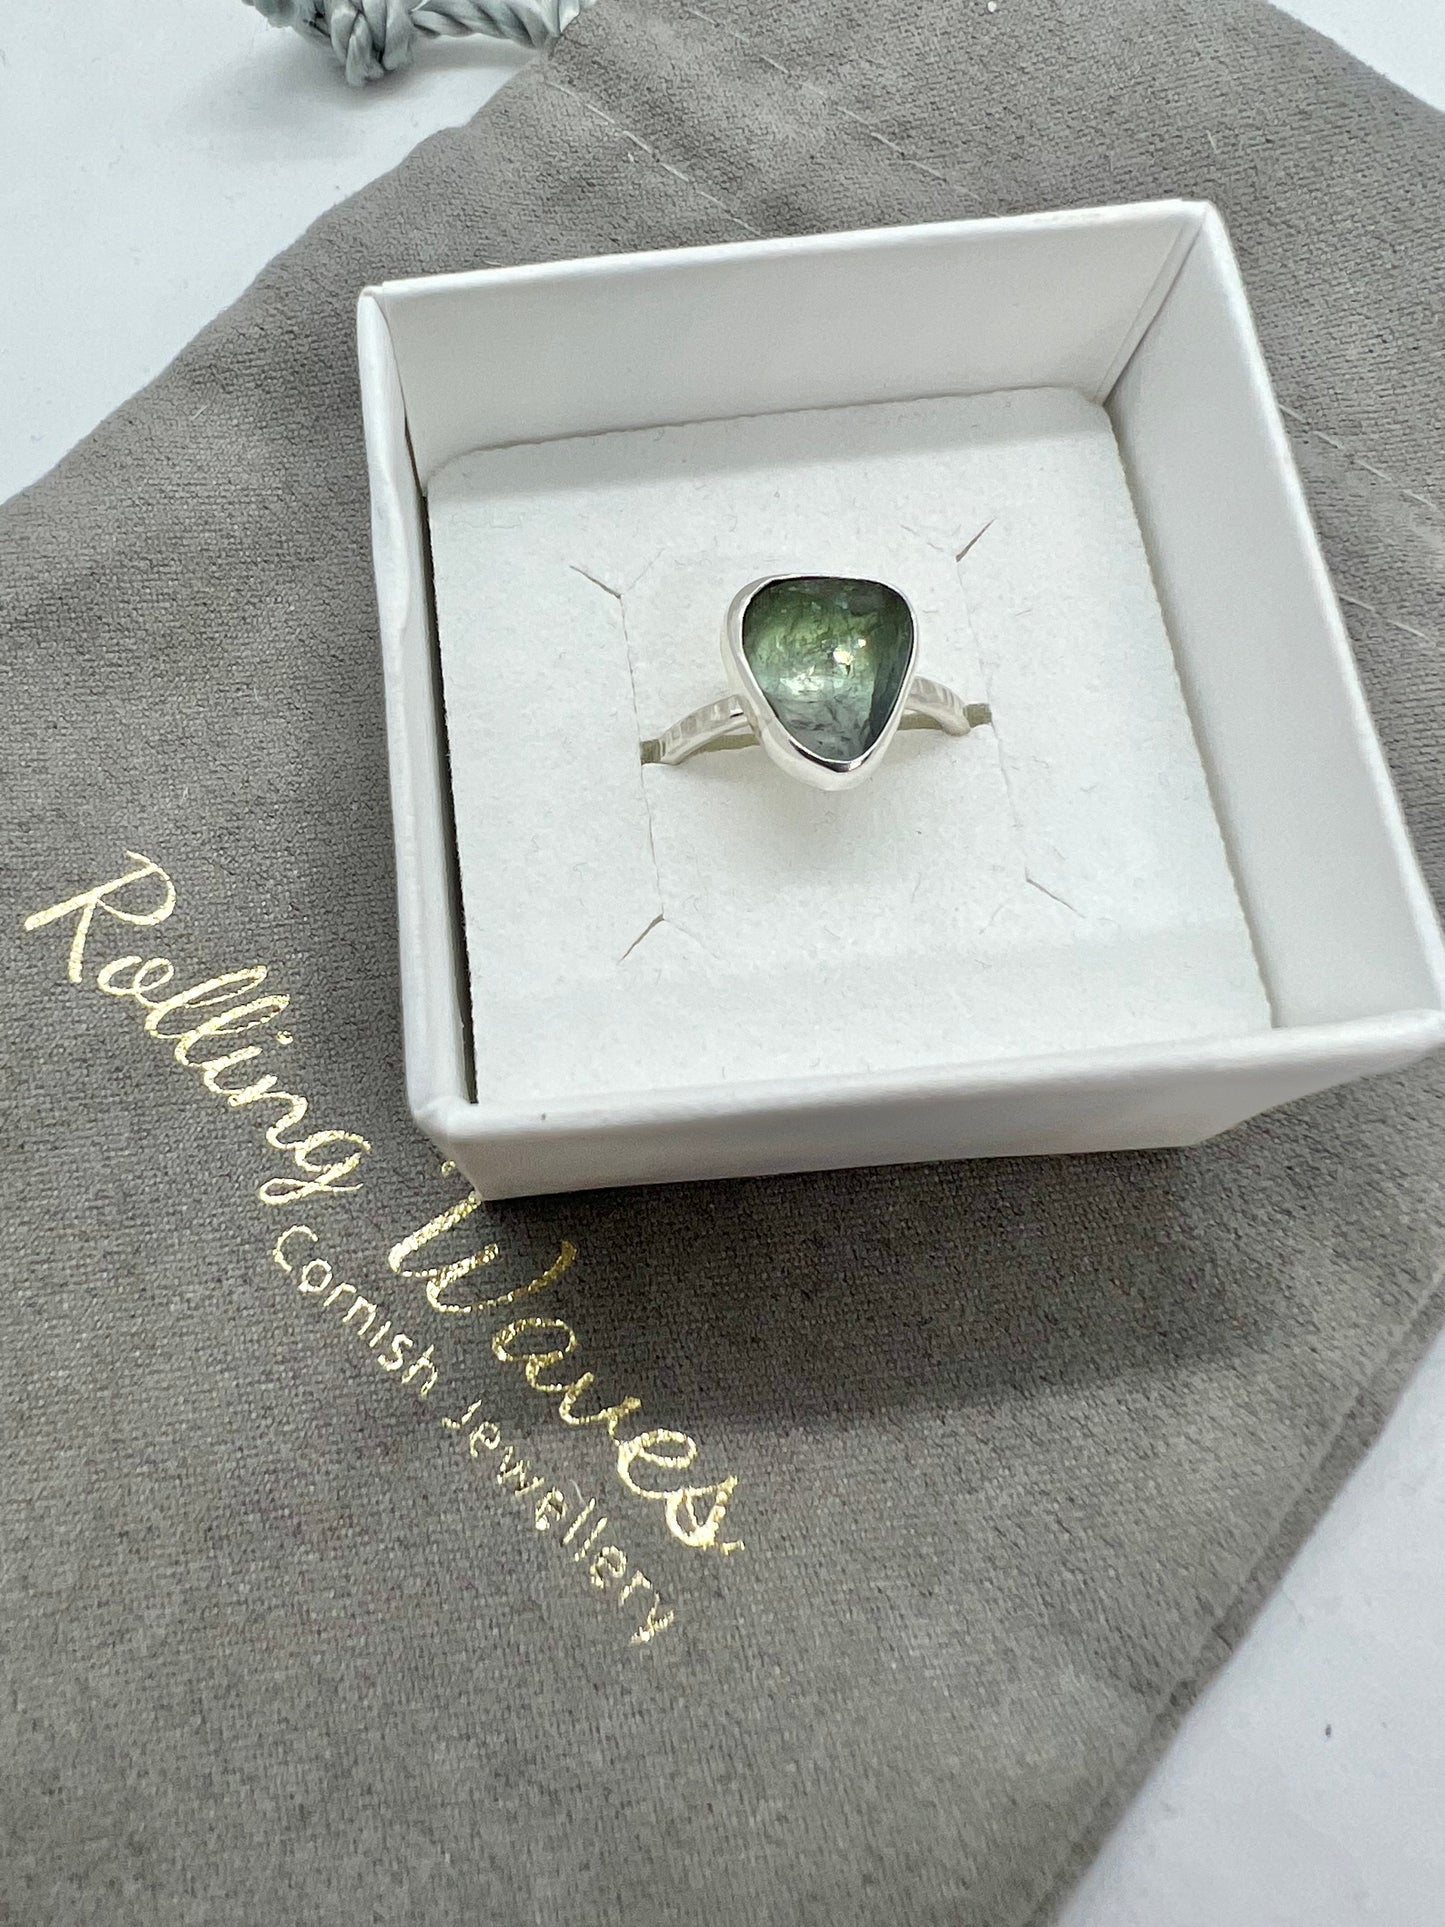 Green Tourmaline ring size K